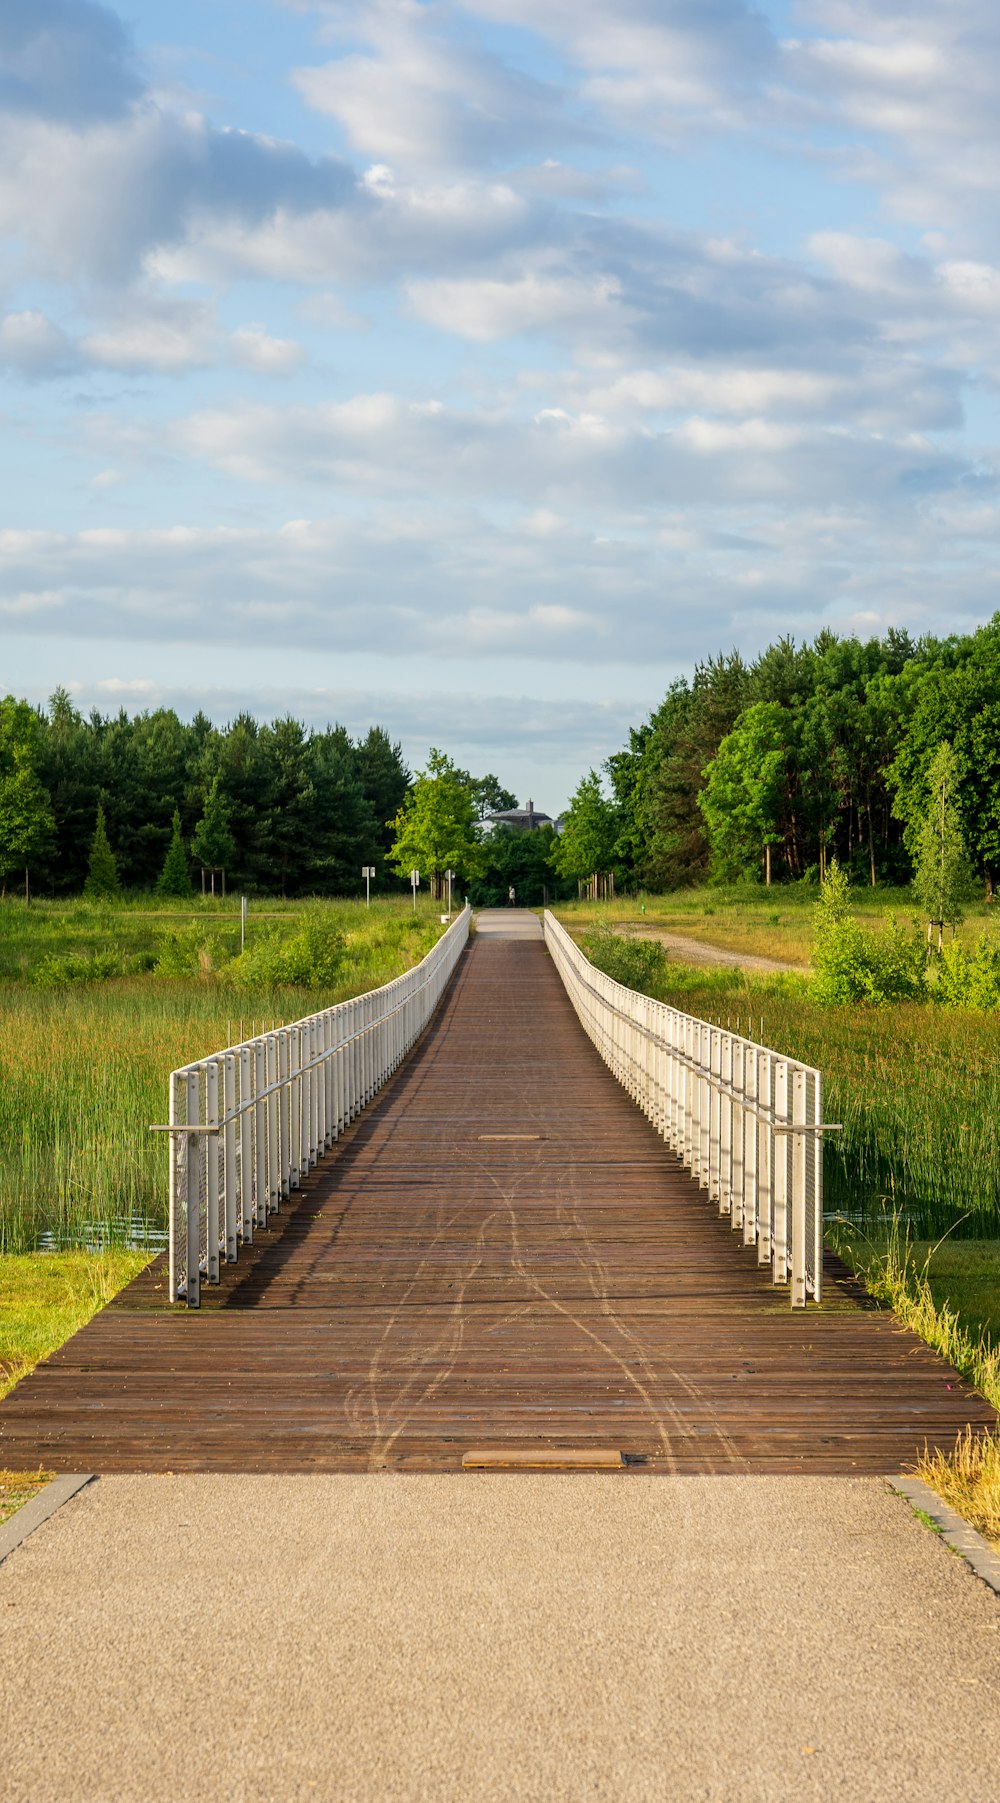 brown wooden bridge over green grass field during daytime